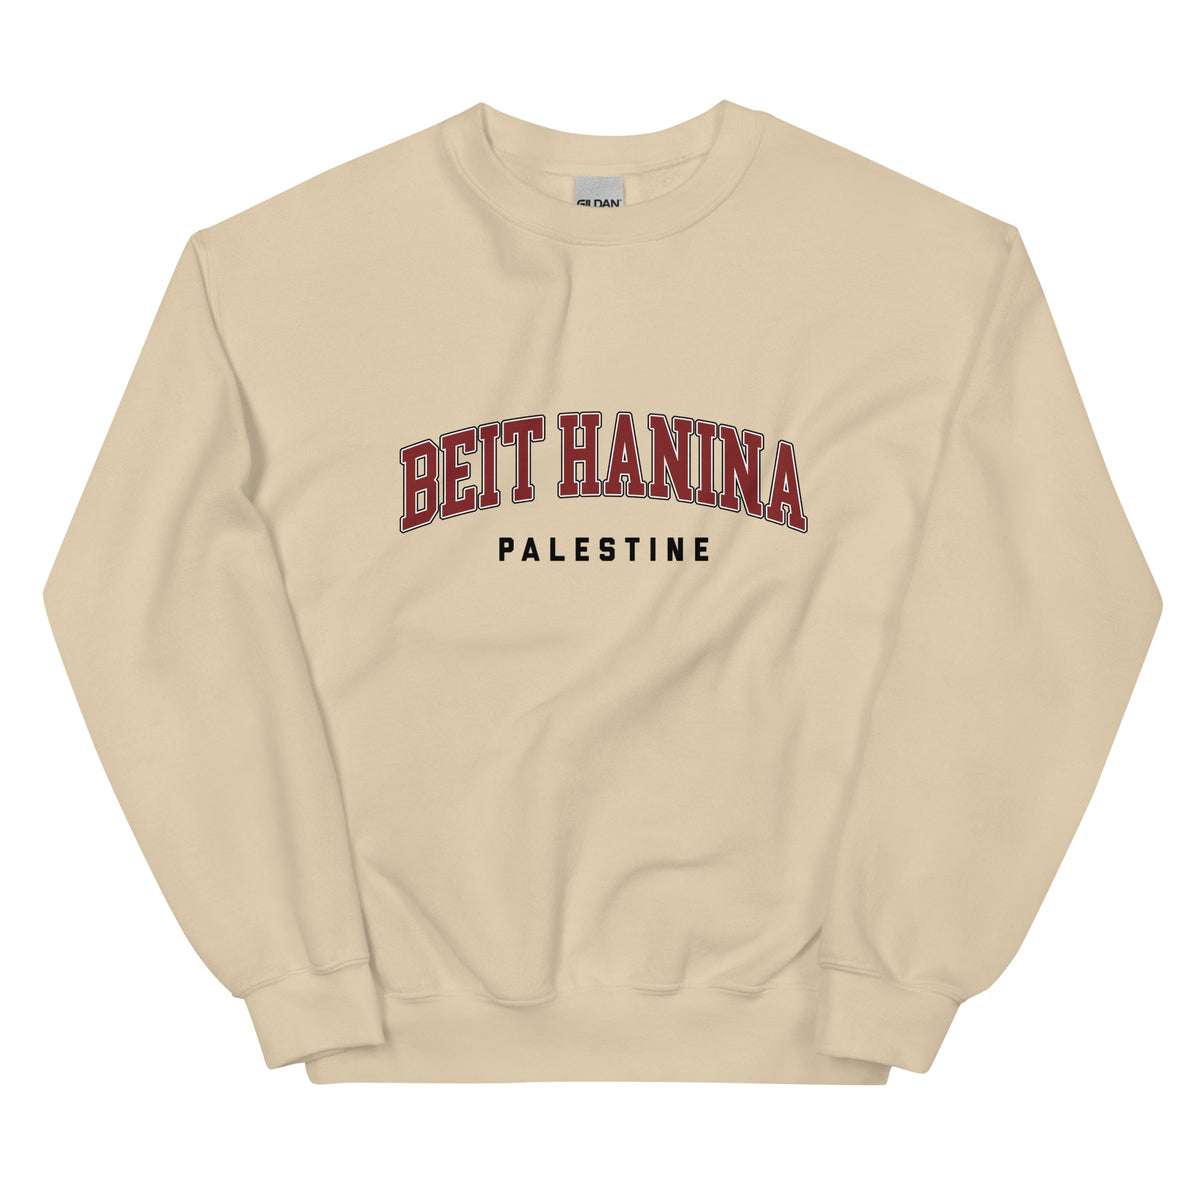 Beit Hanina, Palestine - Sweatshirt